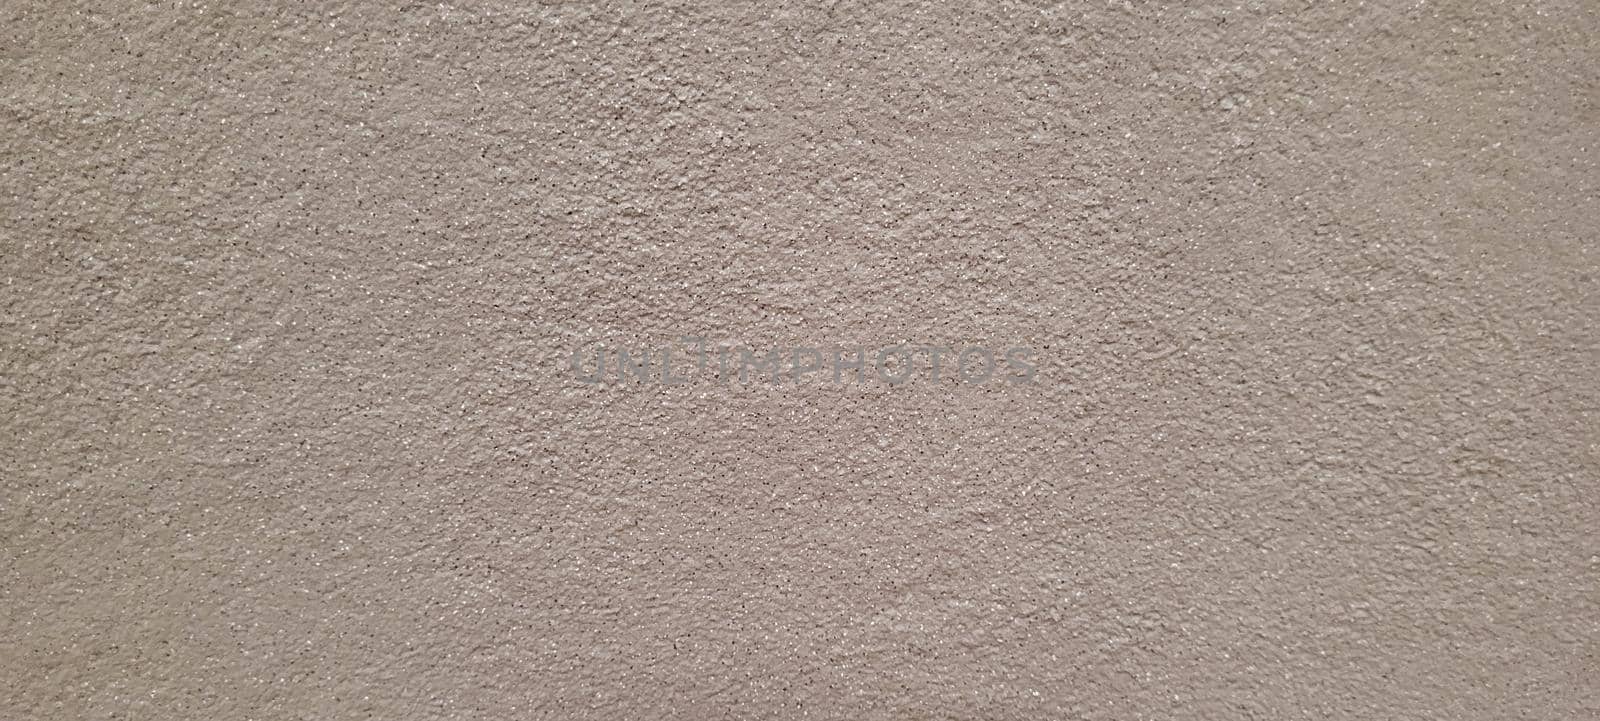 minimalist grayish dark rustic texture background in panel